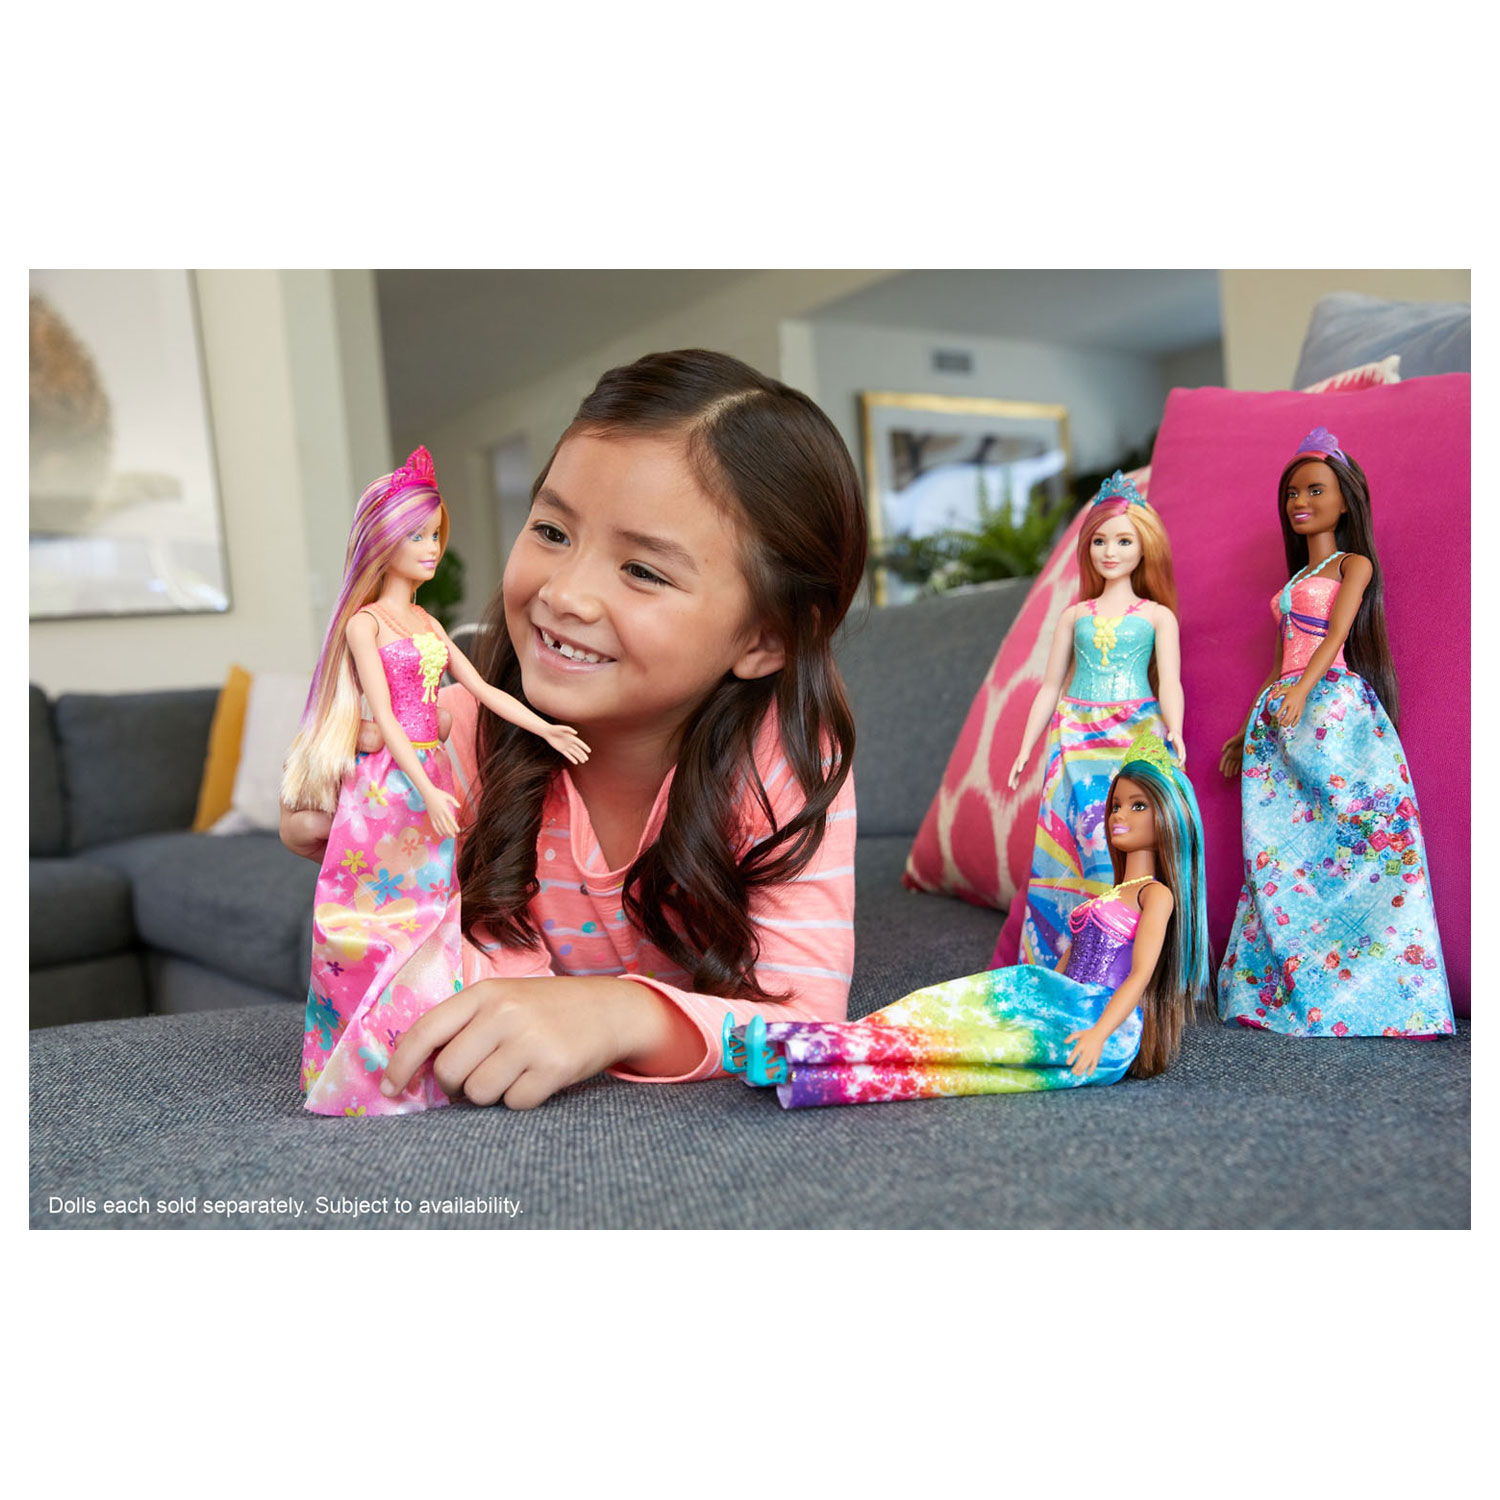 Barbie Dreamtopia: Princess 2